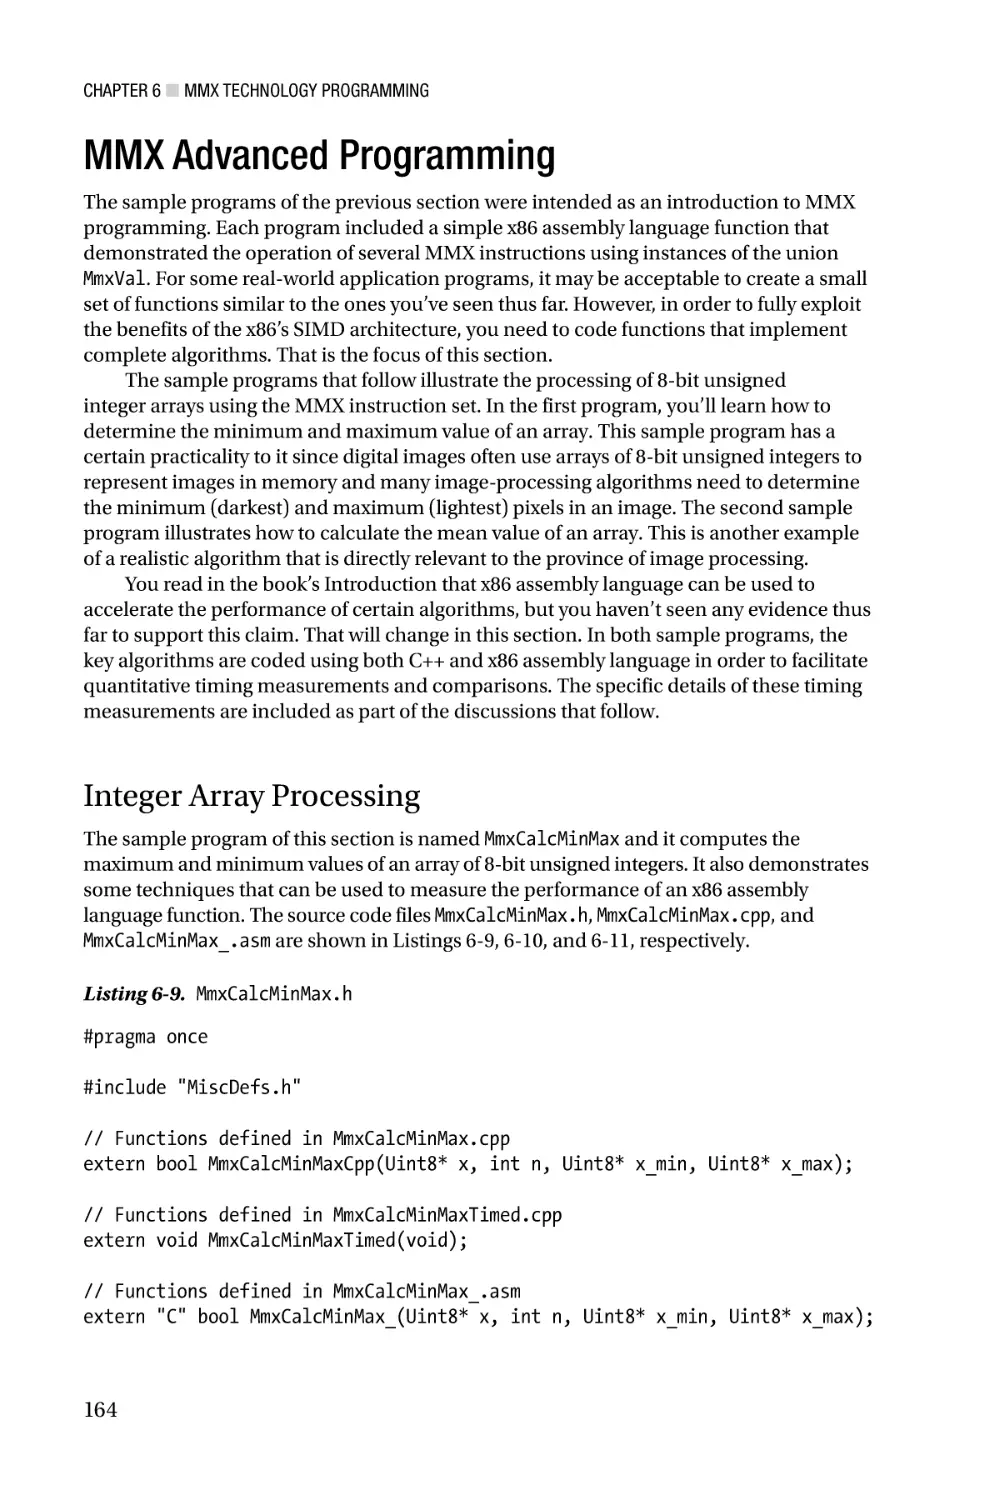 MMX Advanced Programming
Integer Array Processing